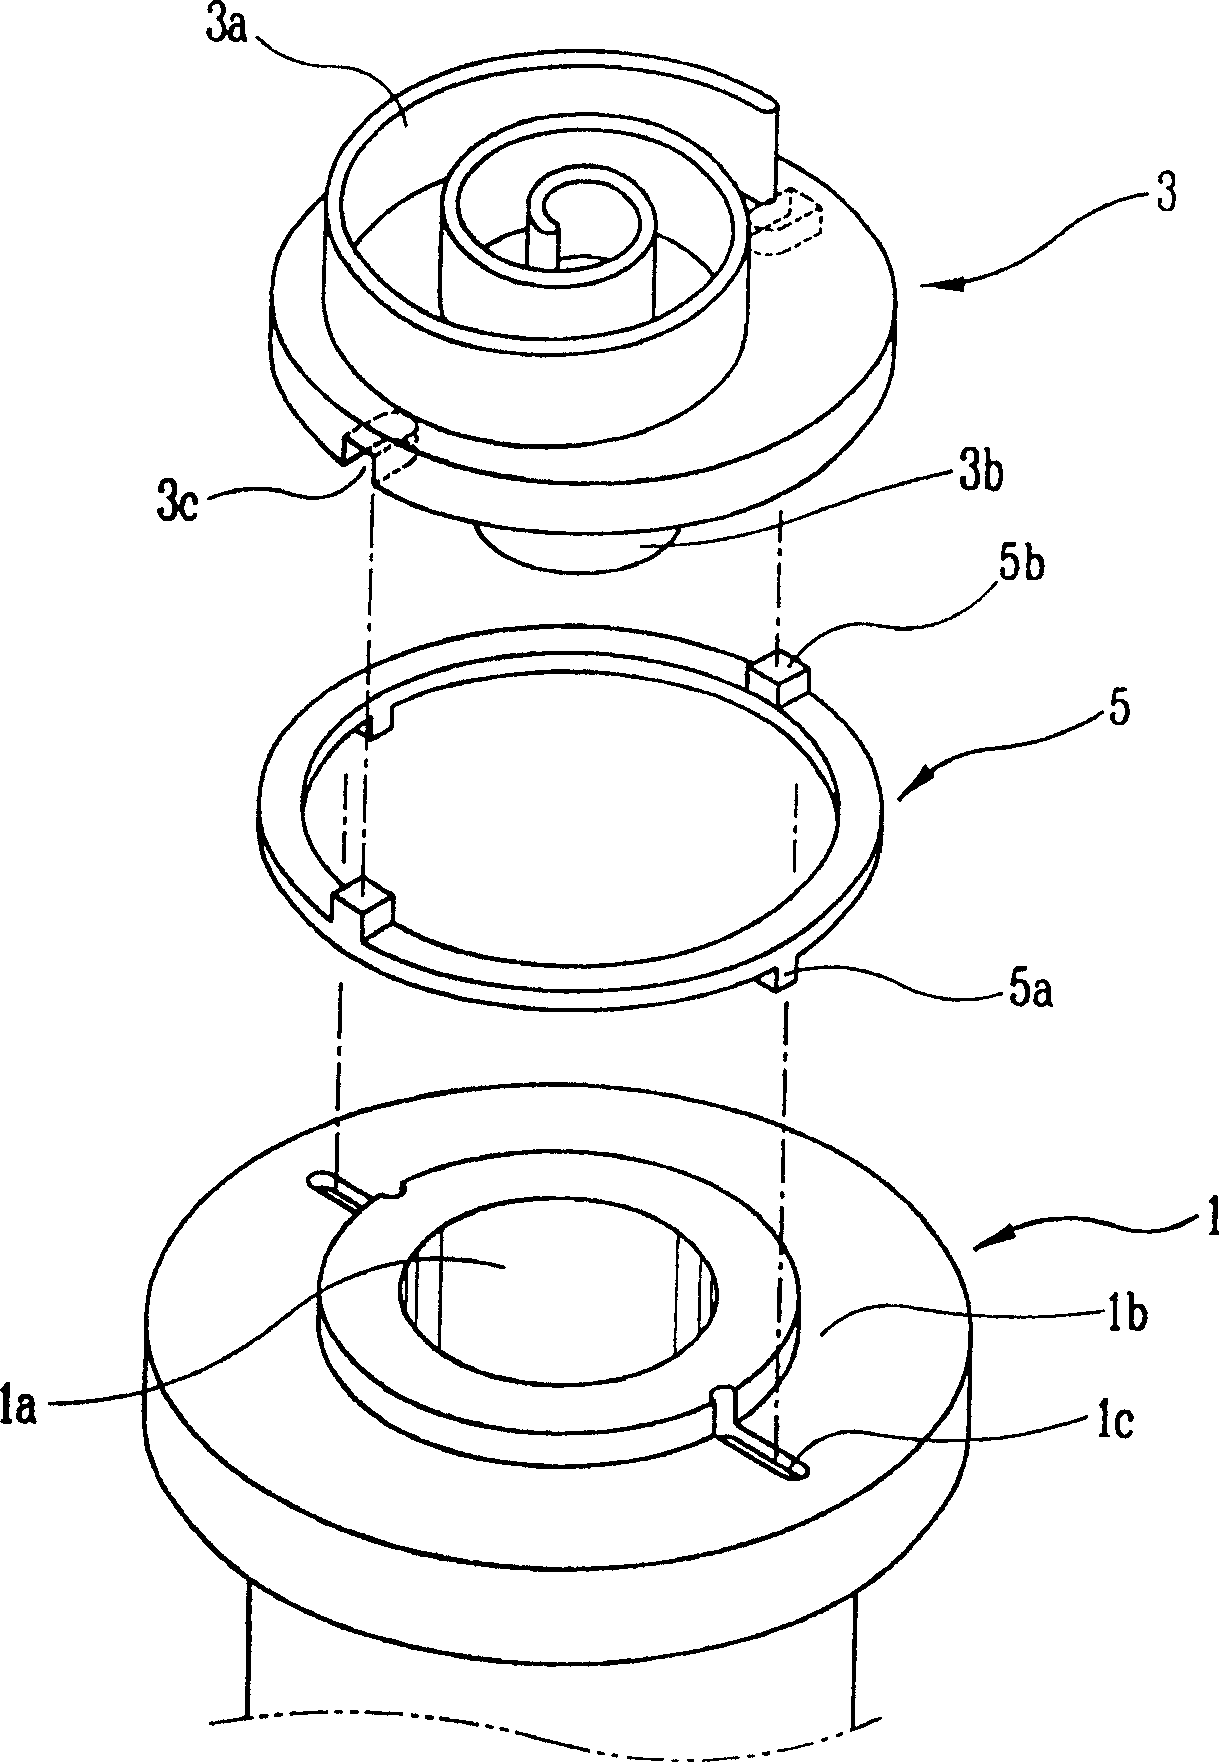 Cross slip-ring oil supply structure for vortex type compressor